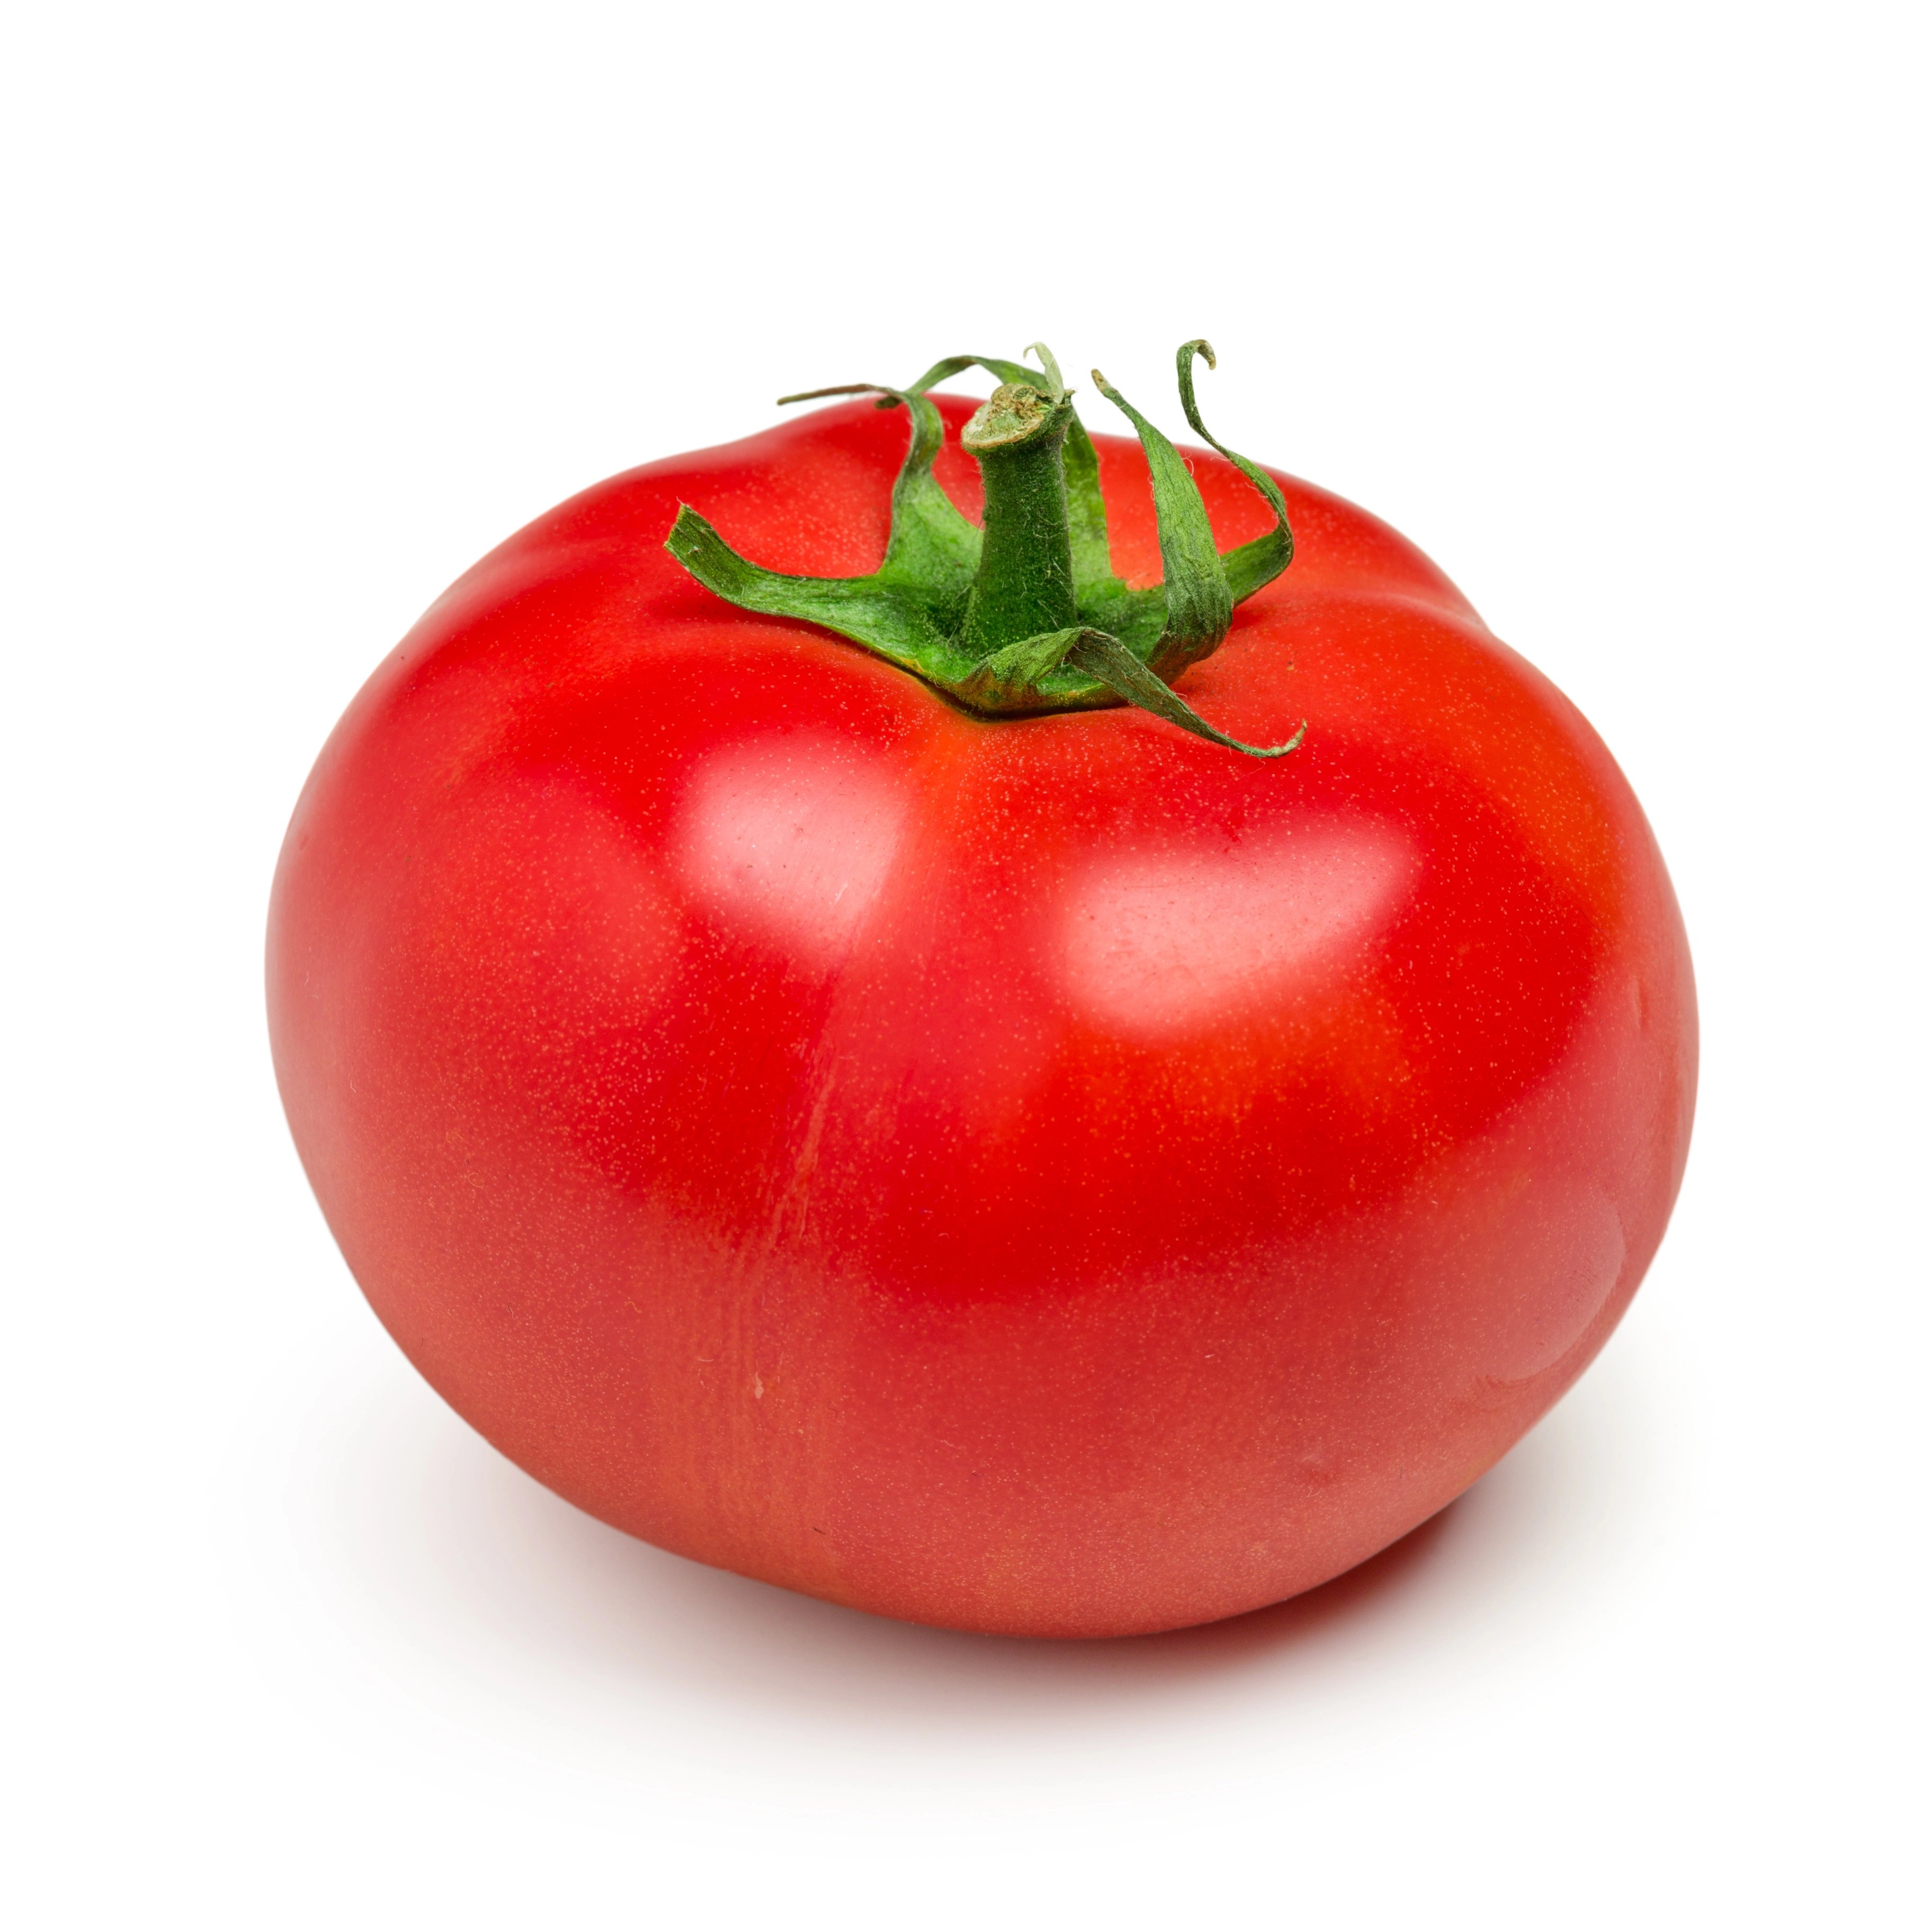 tomato-isolated-fresh-tomato-with-clipping-path-2021-12-13-18-40-41-utc